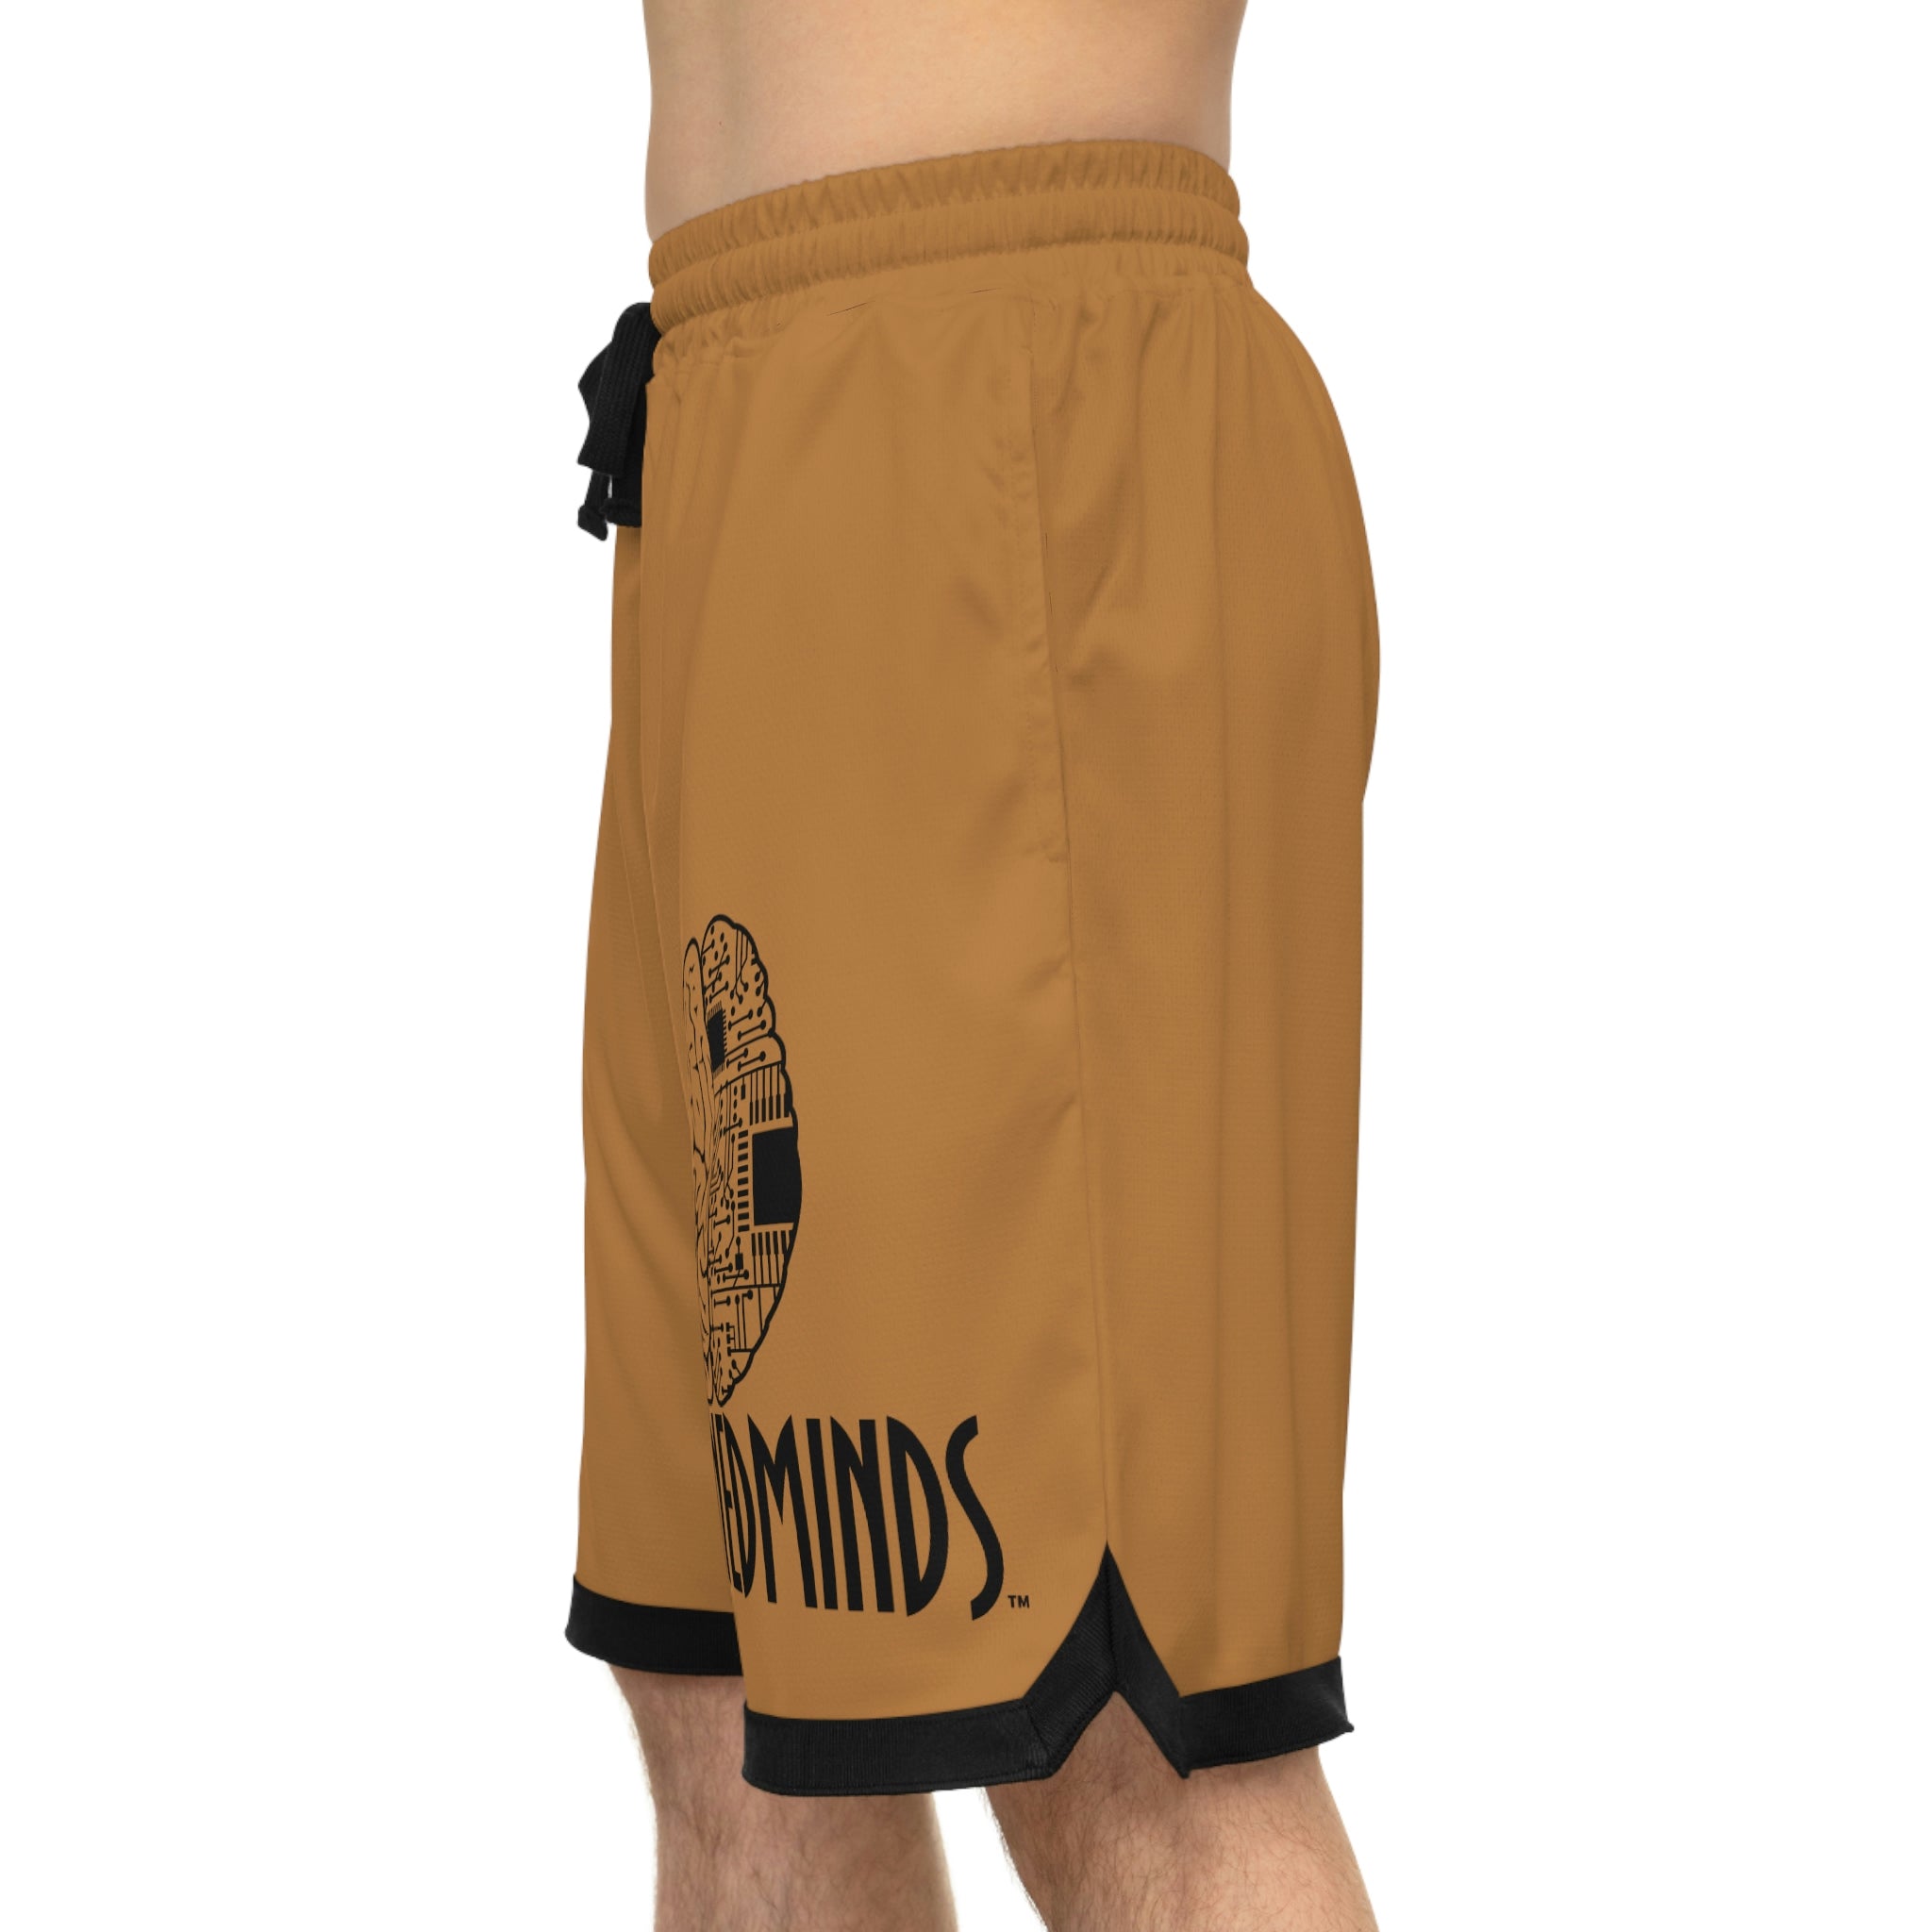 Combinedminds Basketball Shorts LightBrown/Black Logo